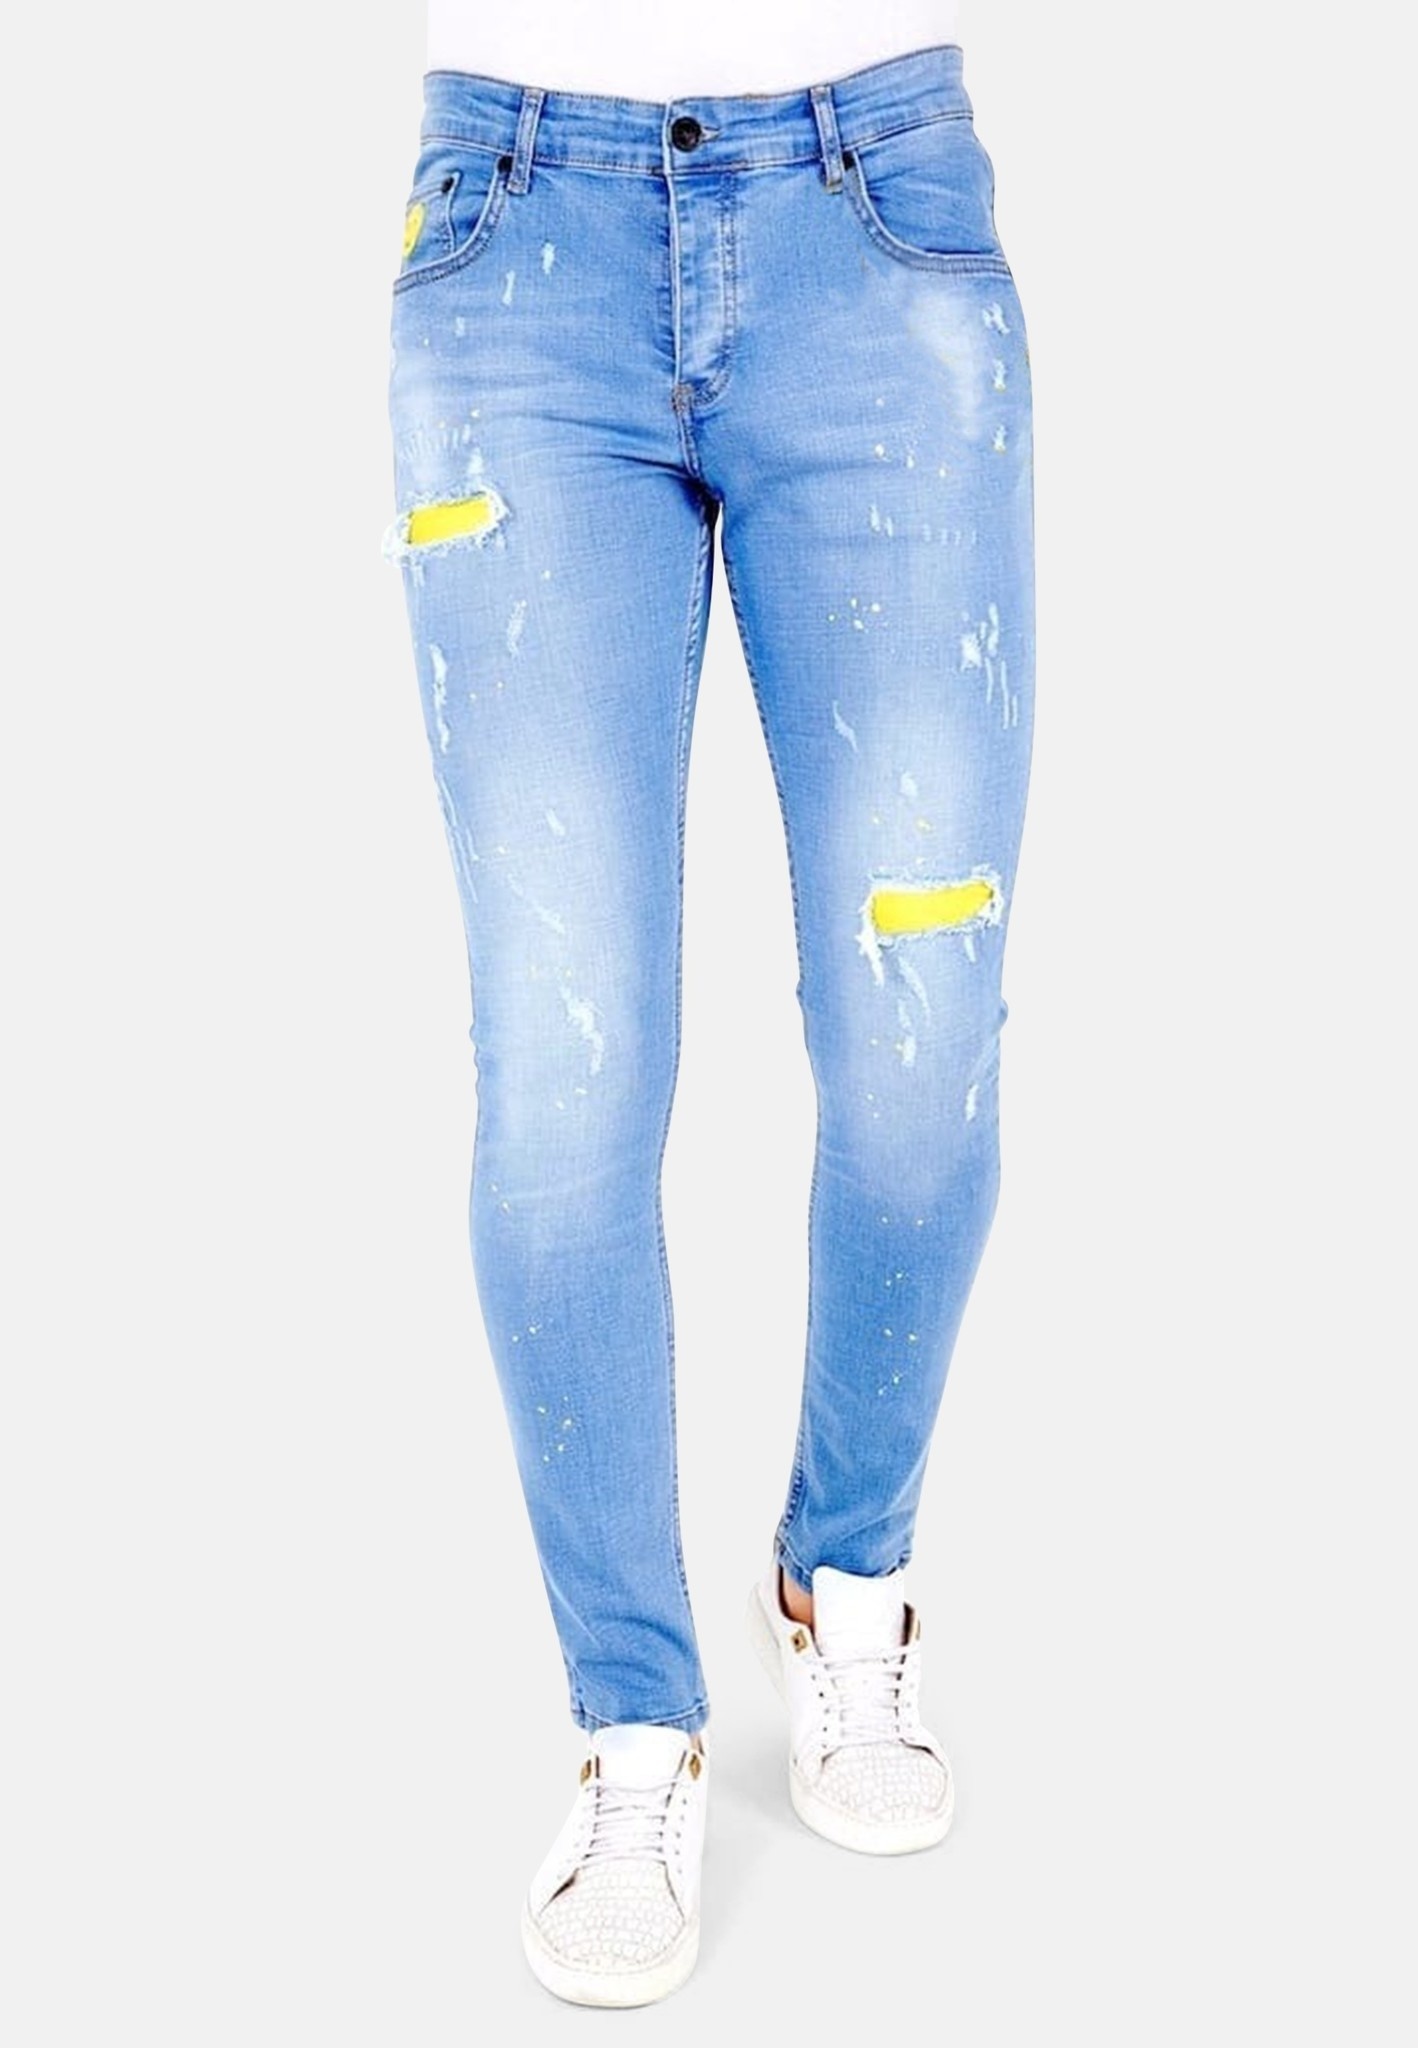 Jeans Heren - Slim Fit - 1024 - Blauw - Local Fanatic